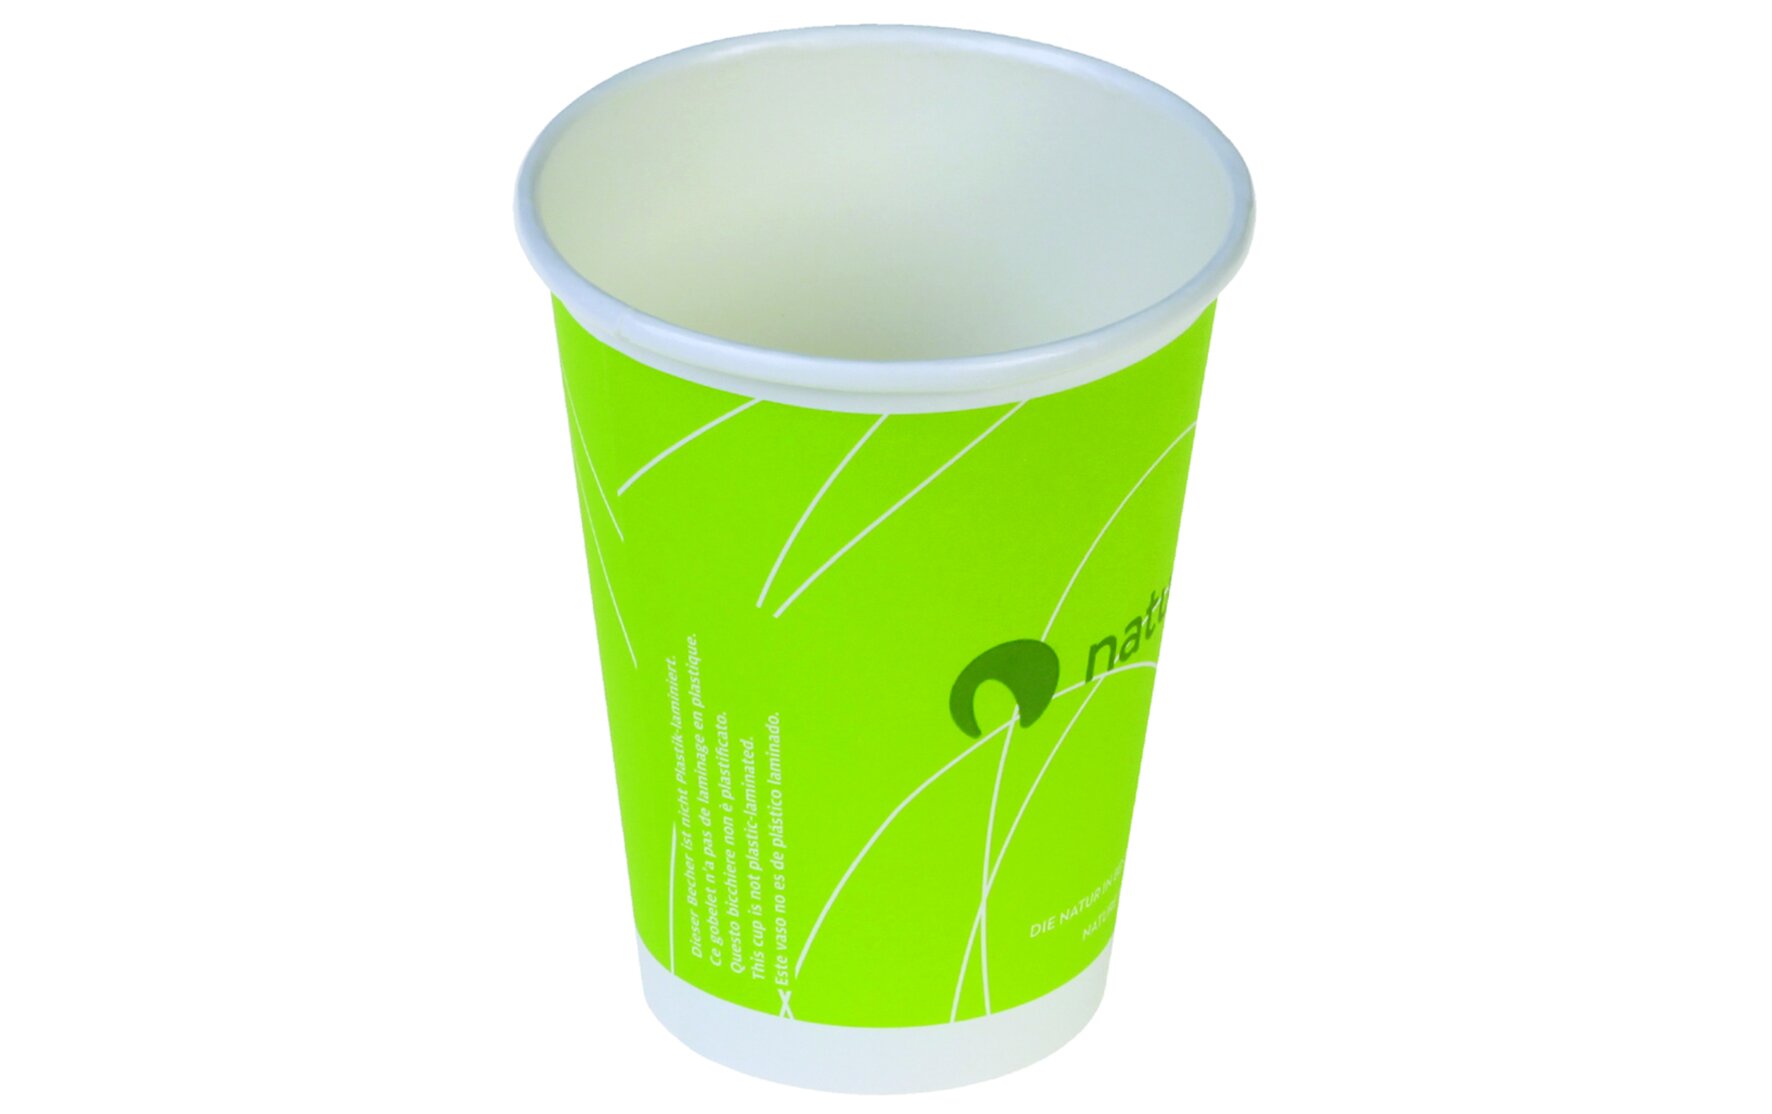 Pacovis Kaffeebecher ohne Plastiklaminierung naturesse Karton grün, 300ml